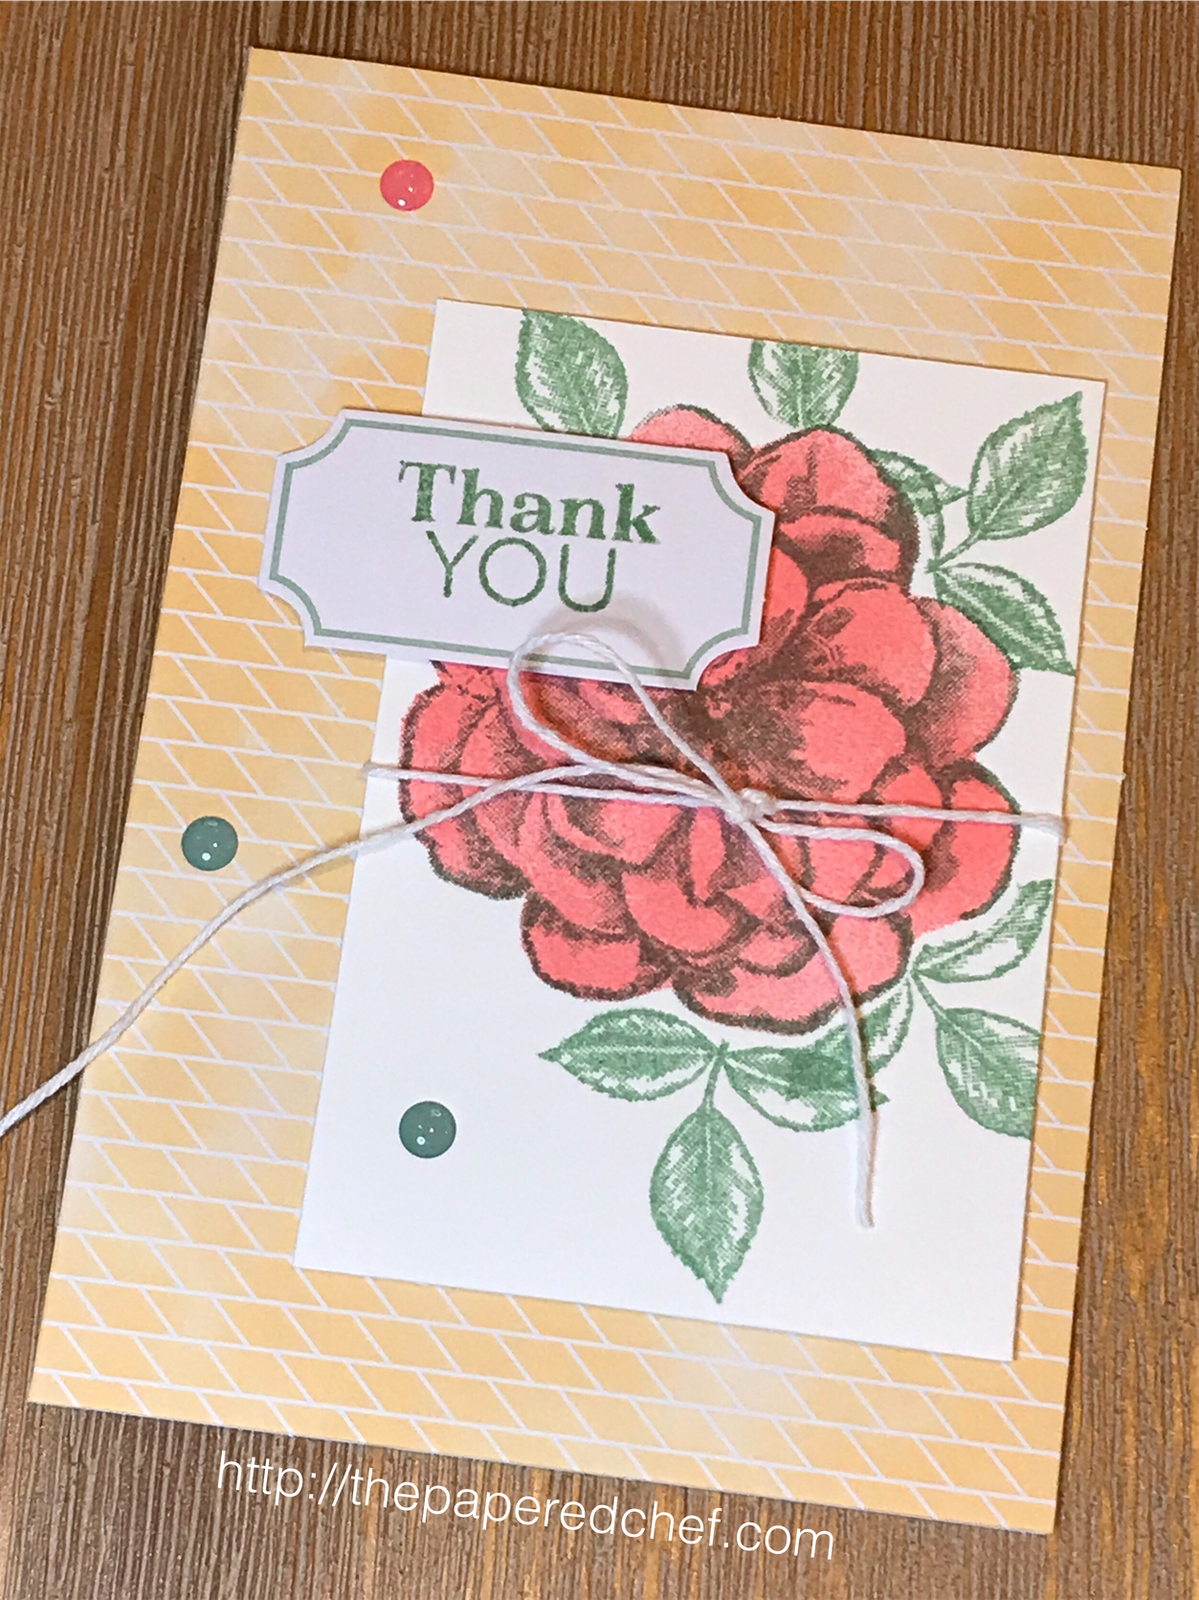 Sentimental Rose Thank You Card